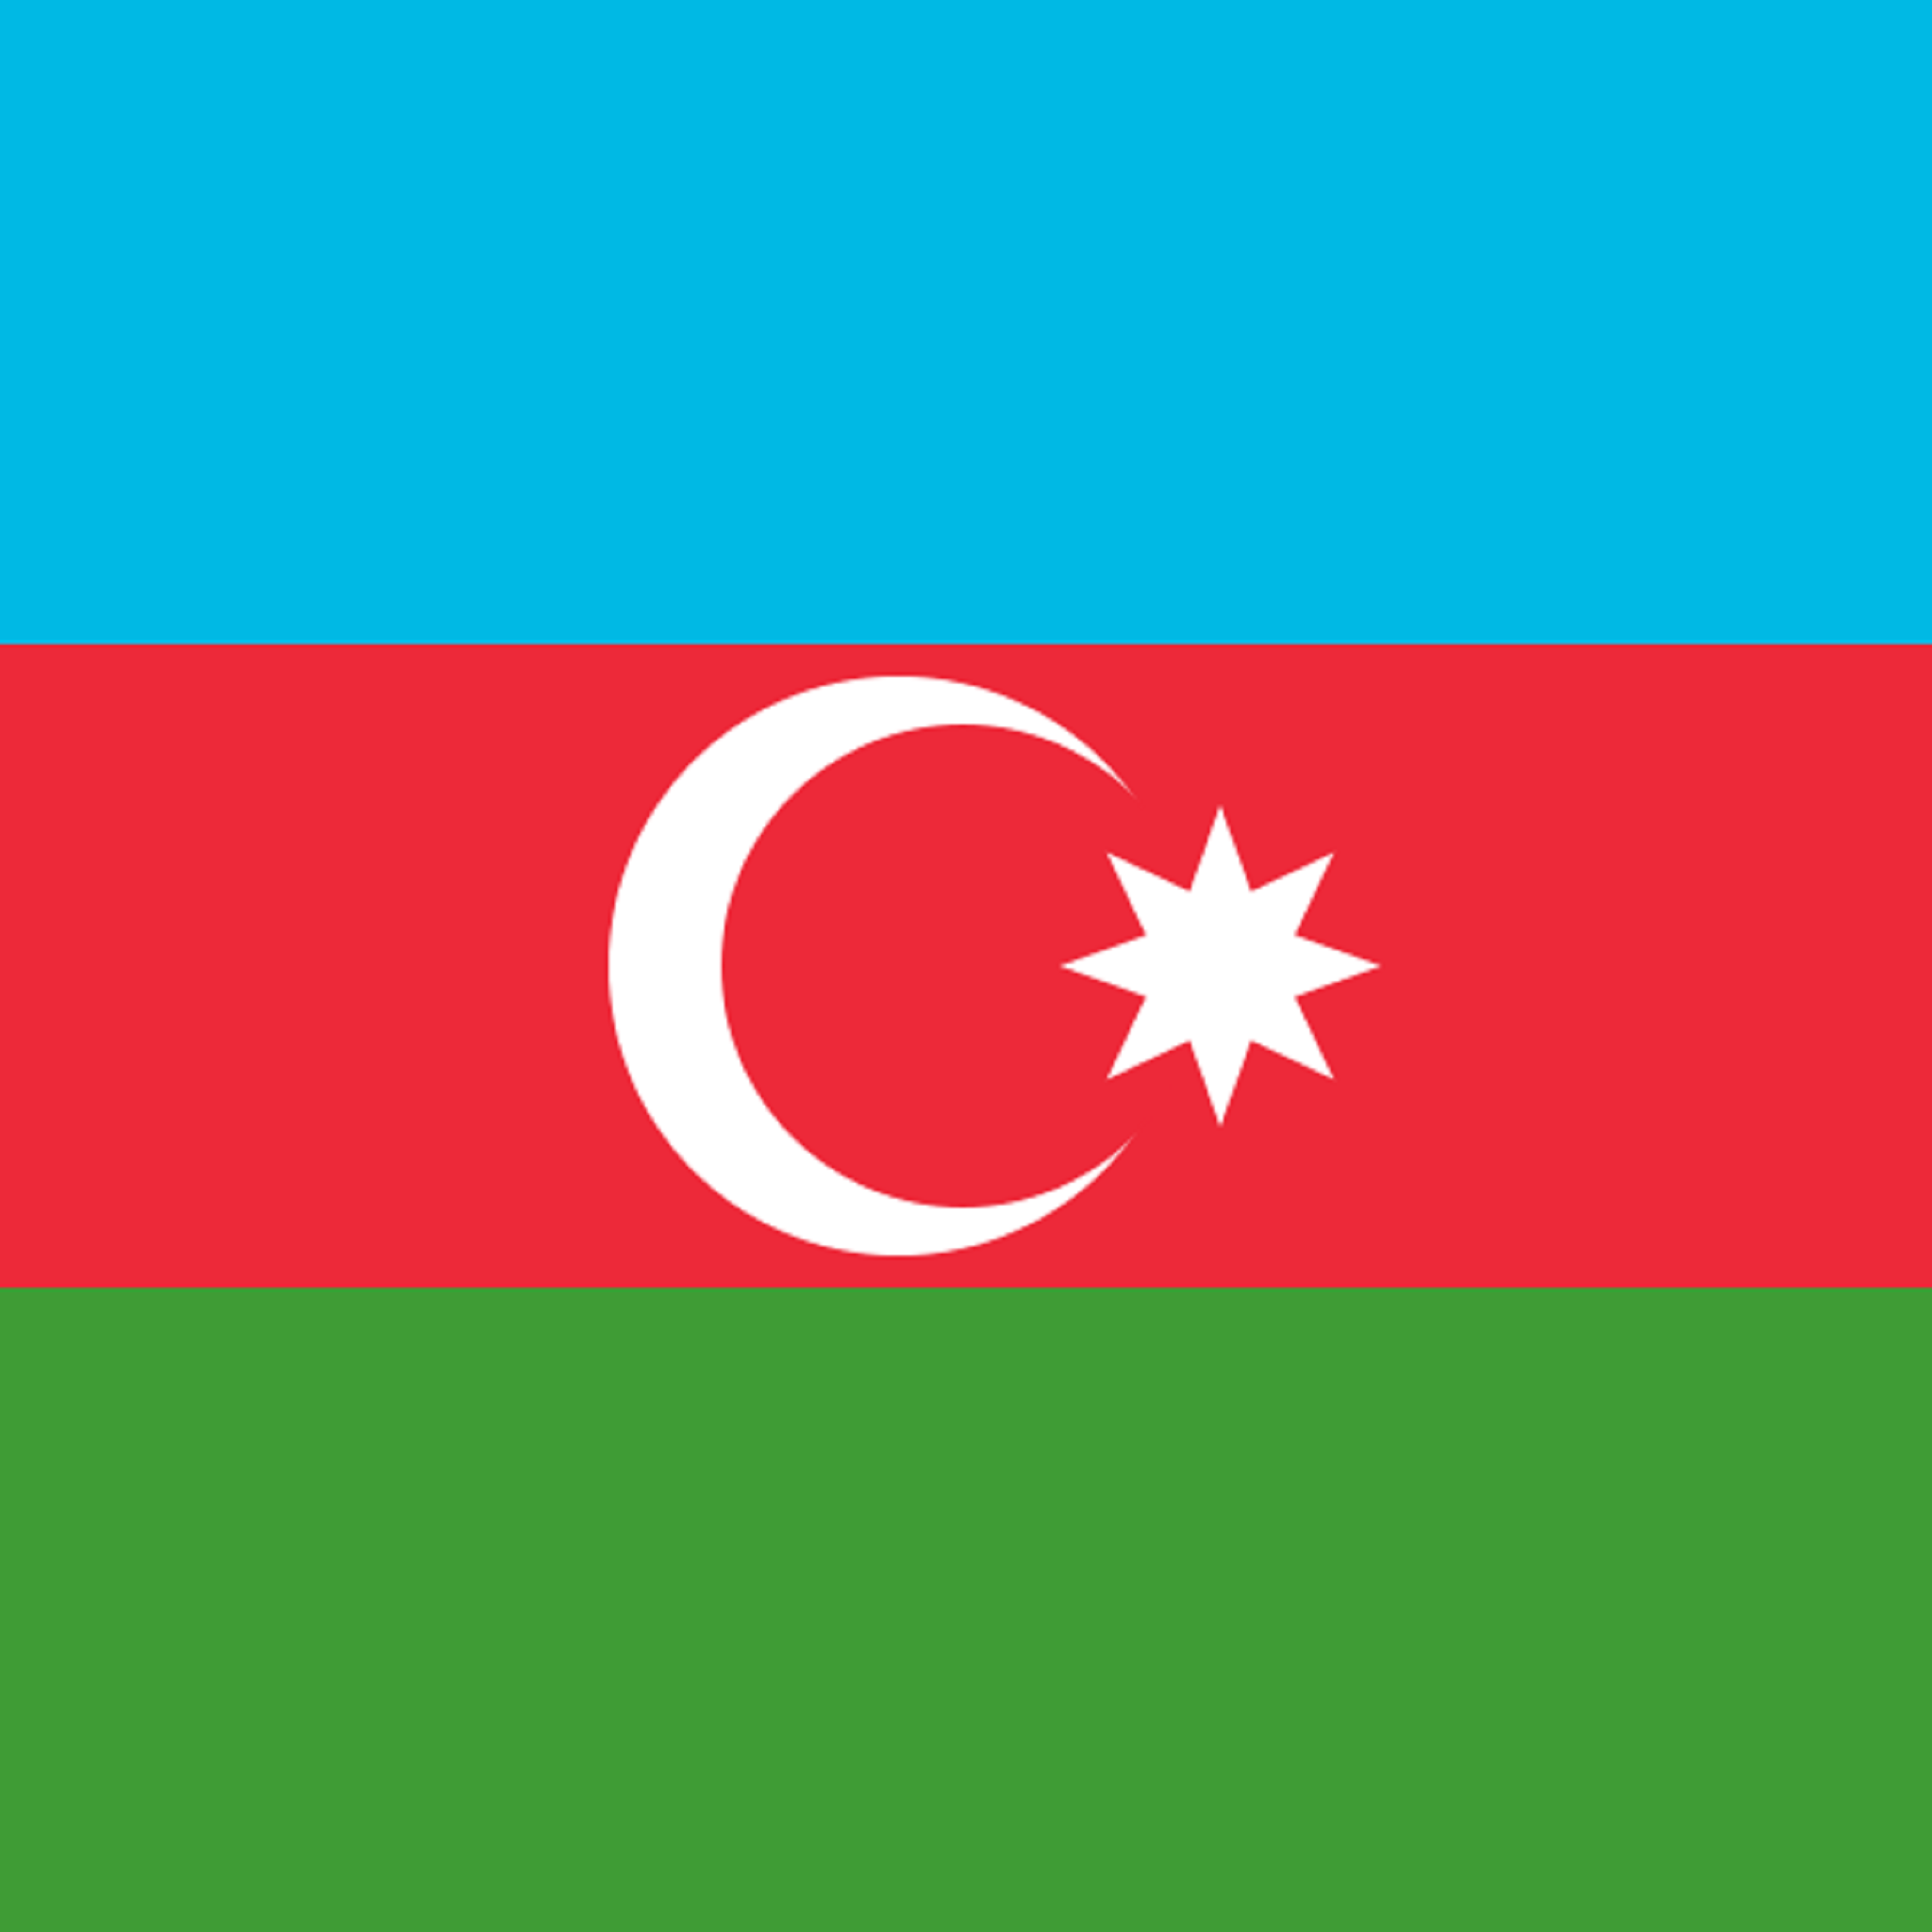 Флаг Азербайджана 2д. Флаг Азербайджана 1x1. Флаг азербайджанской Республики. Республика Азербайджан Флан.